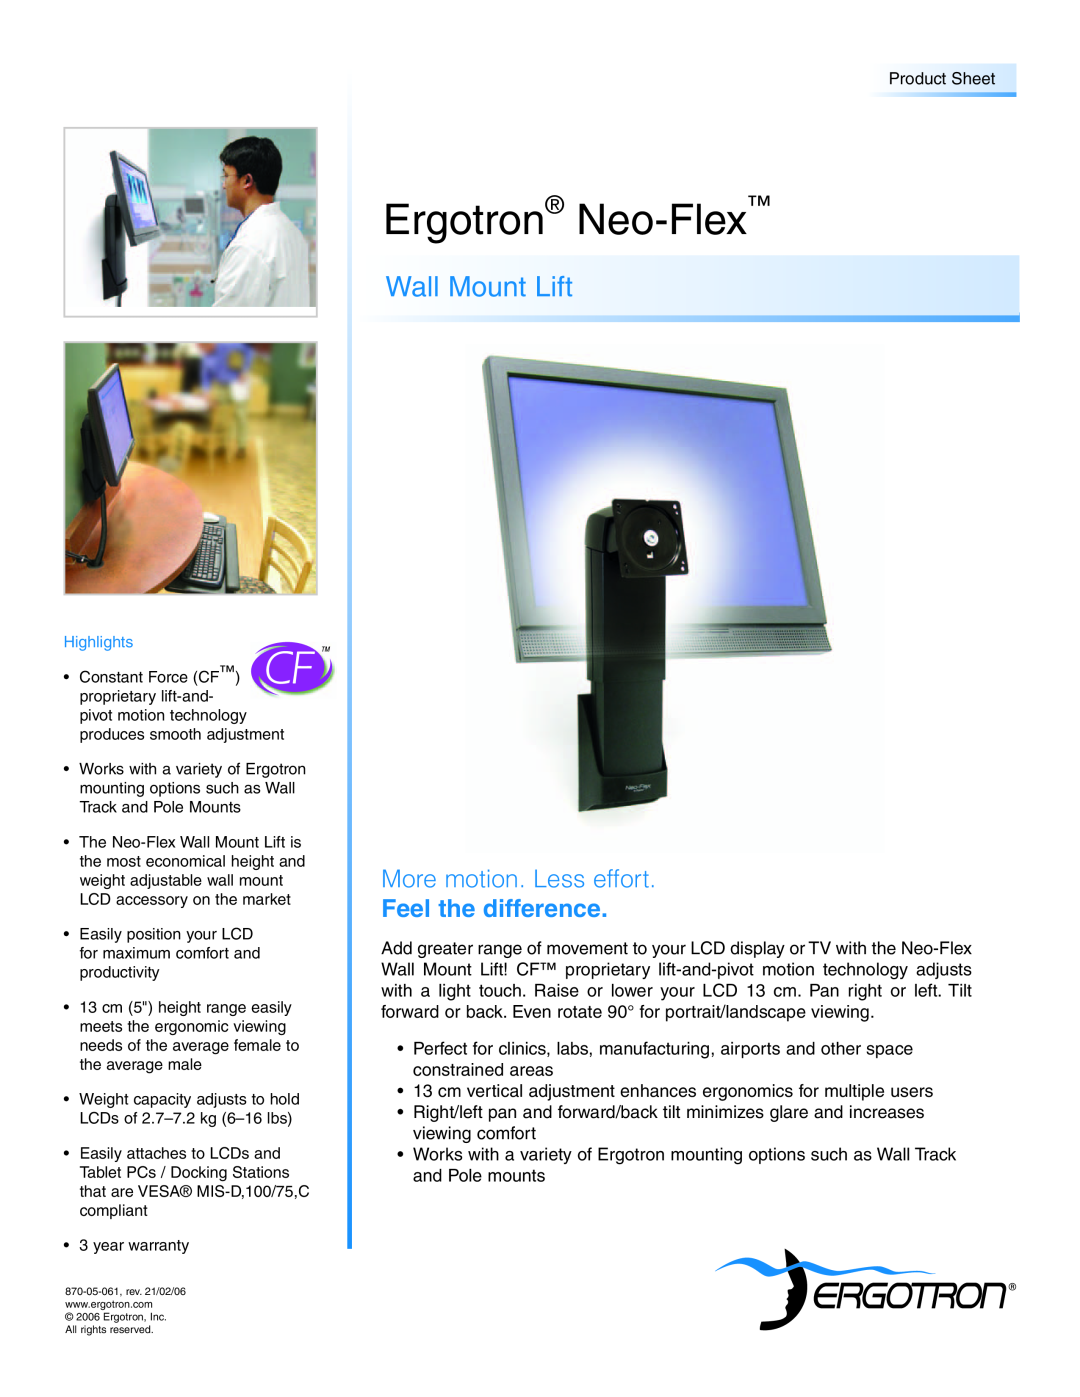 Ergotron Wall Mount Lift warranty Ergotron Neo-Flex, More motion. Less effort, Feel the difference 